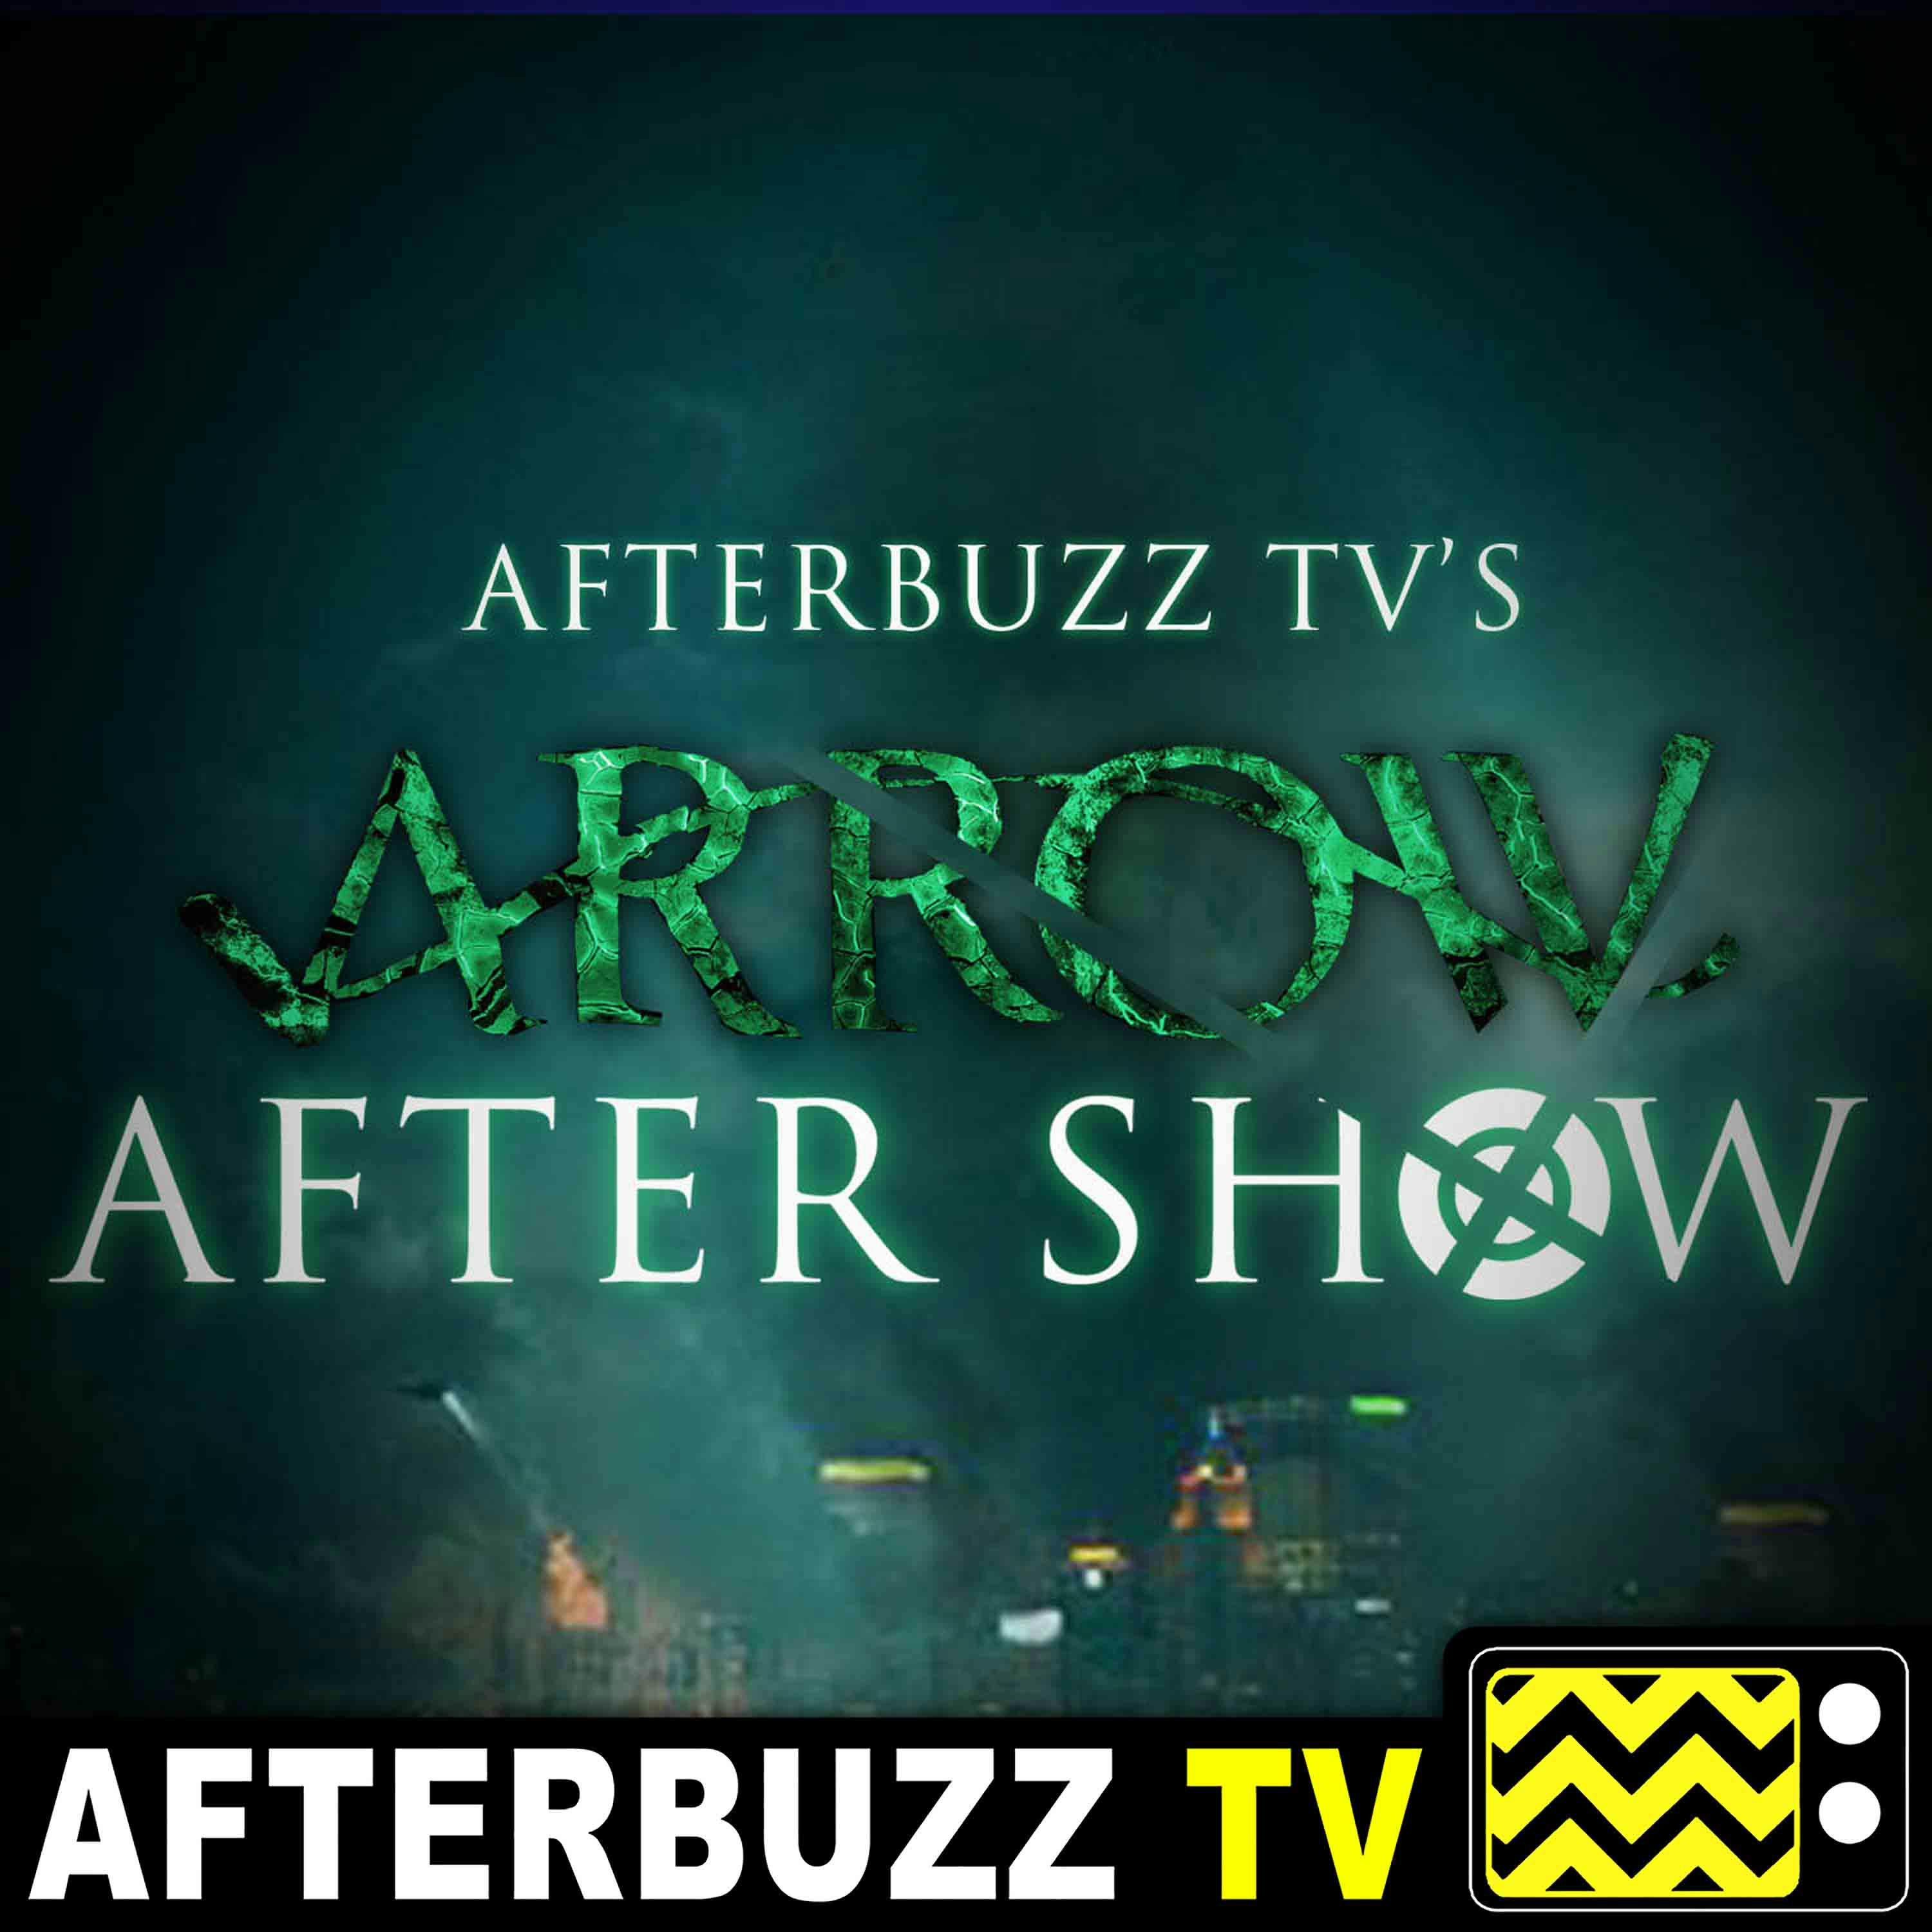 ”Prochnost” Season 8 Episode 5 ’Arrow’ Review